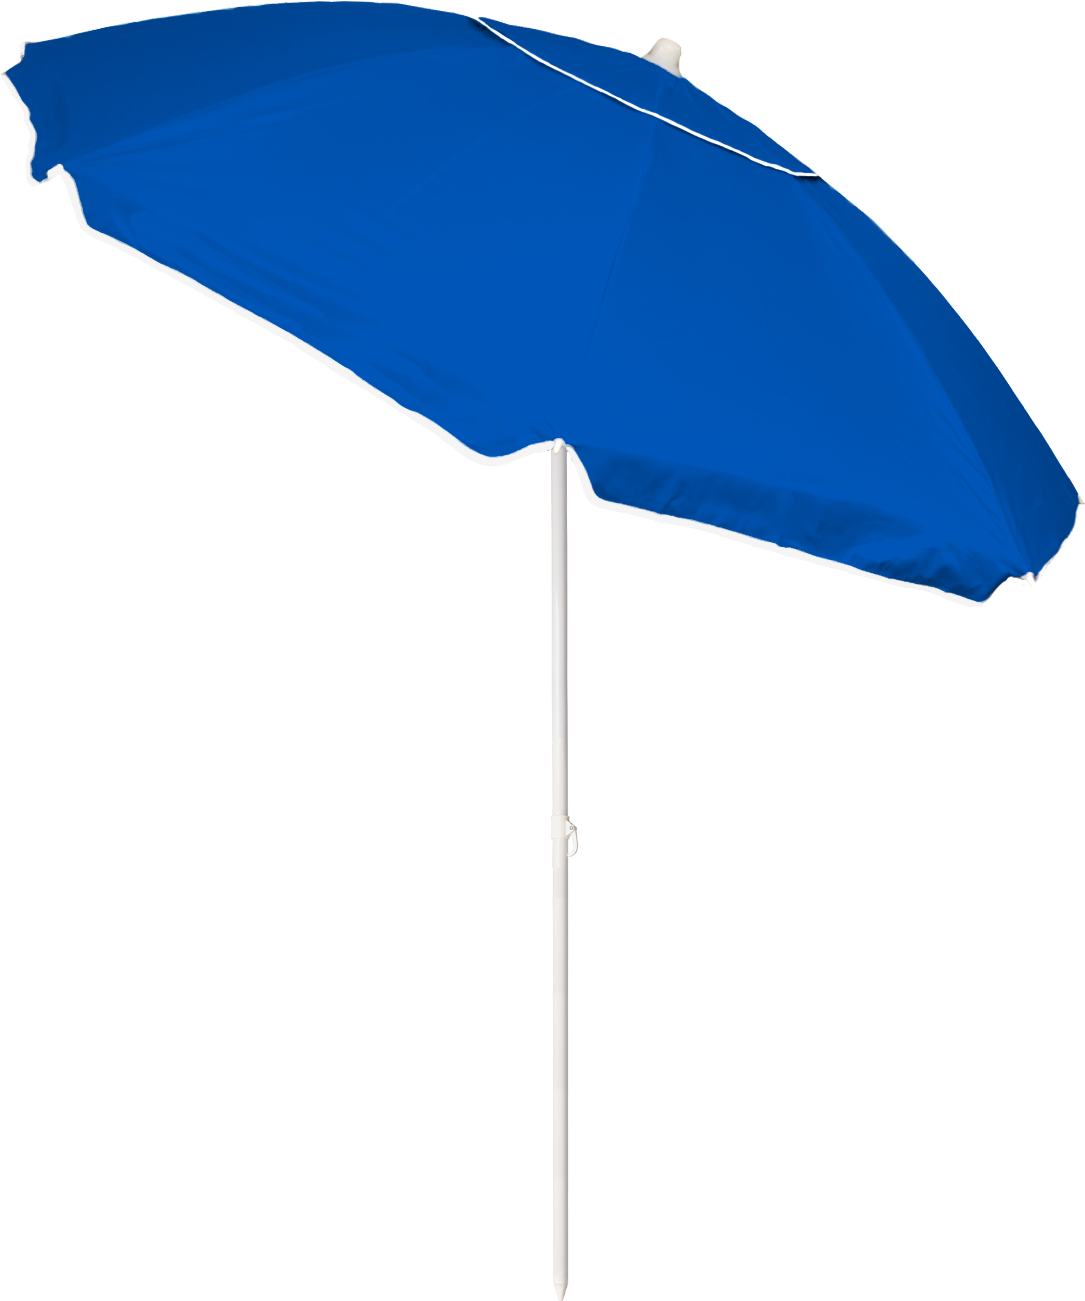 Bluewater Beach 5.5 Feet Round Beach Umbrella with UPF 50+ Sun